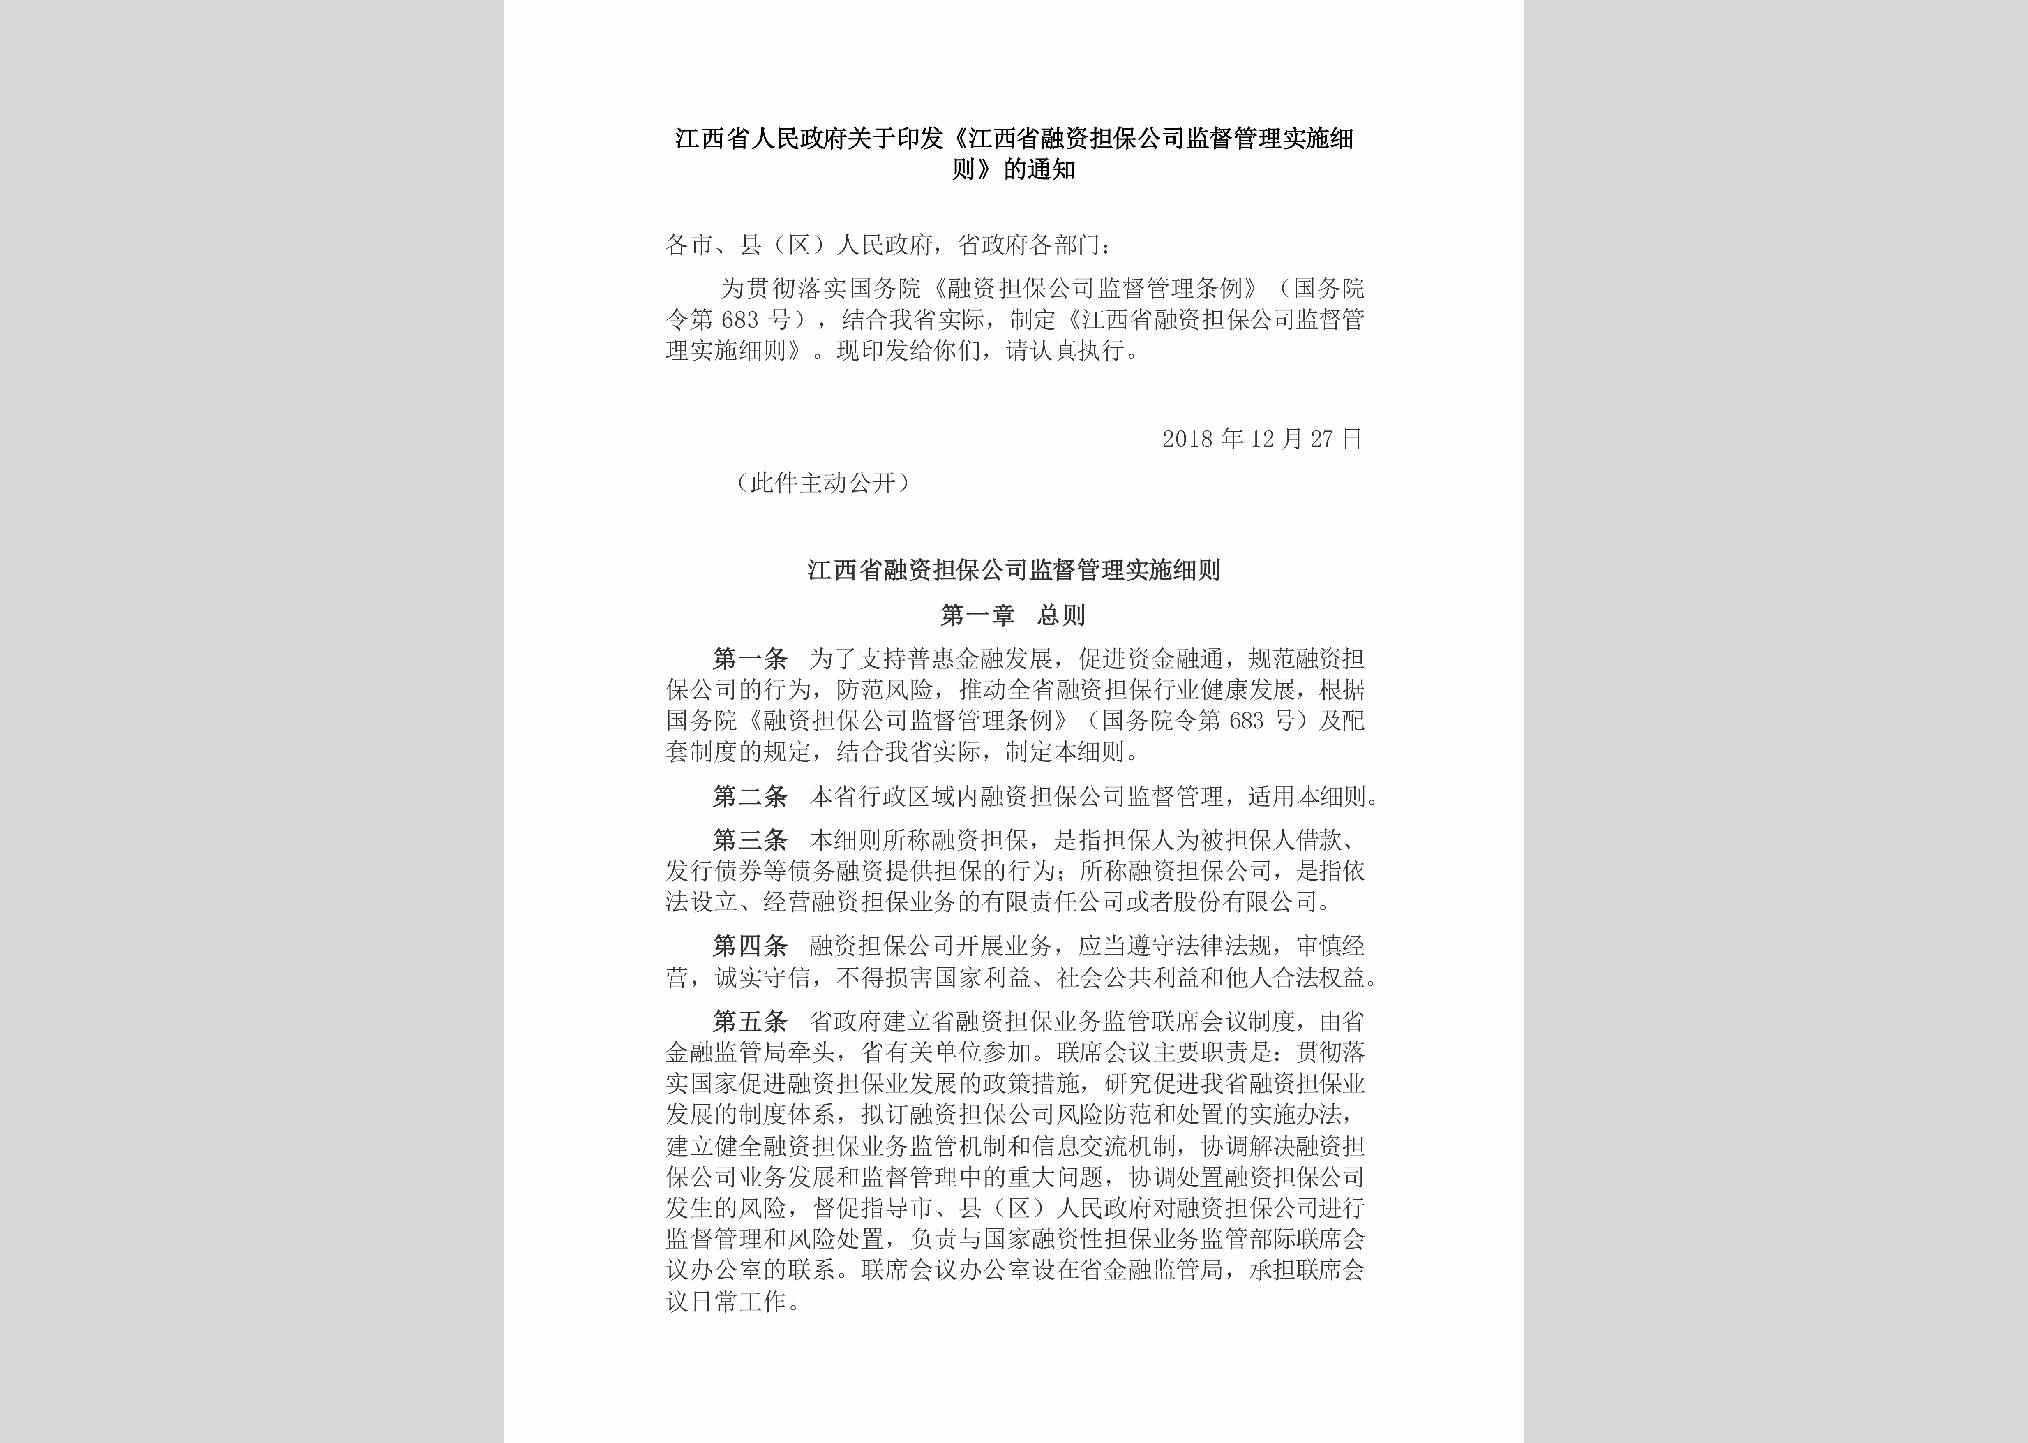 JX-GSJDGLXZ-2018：江西省人民政府关于印发《江西省融资担保公司监督管理实施细则》的通知